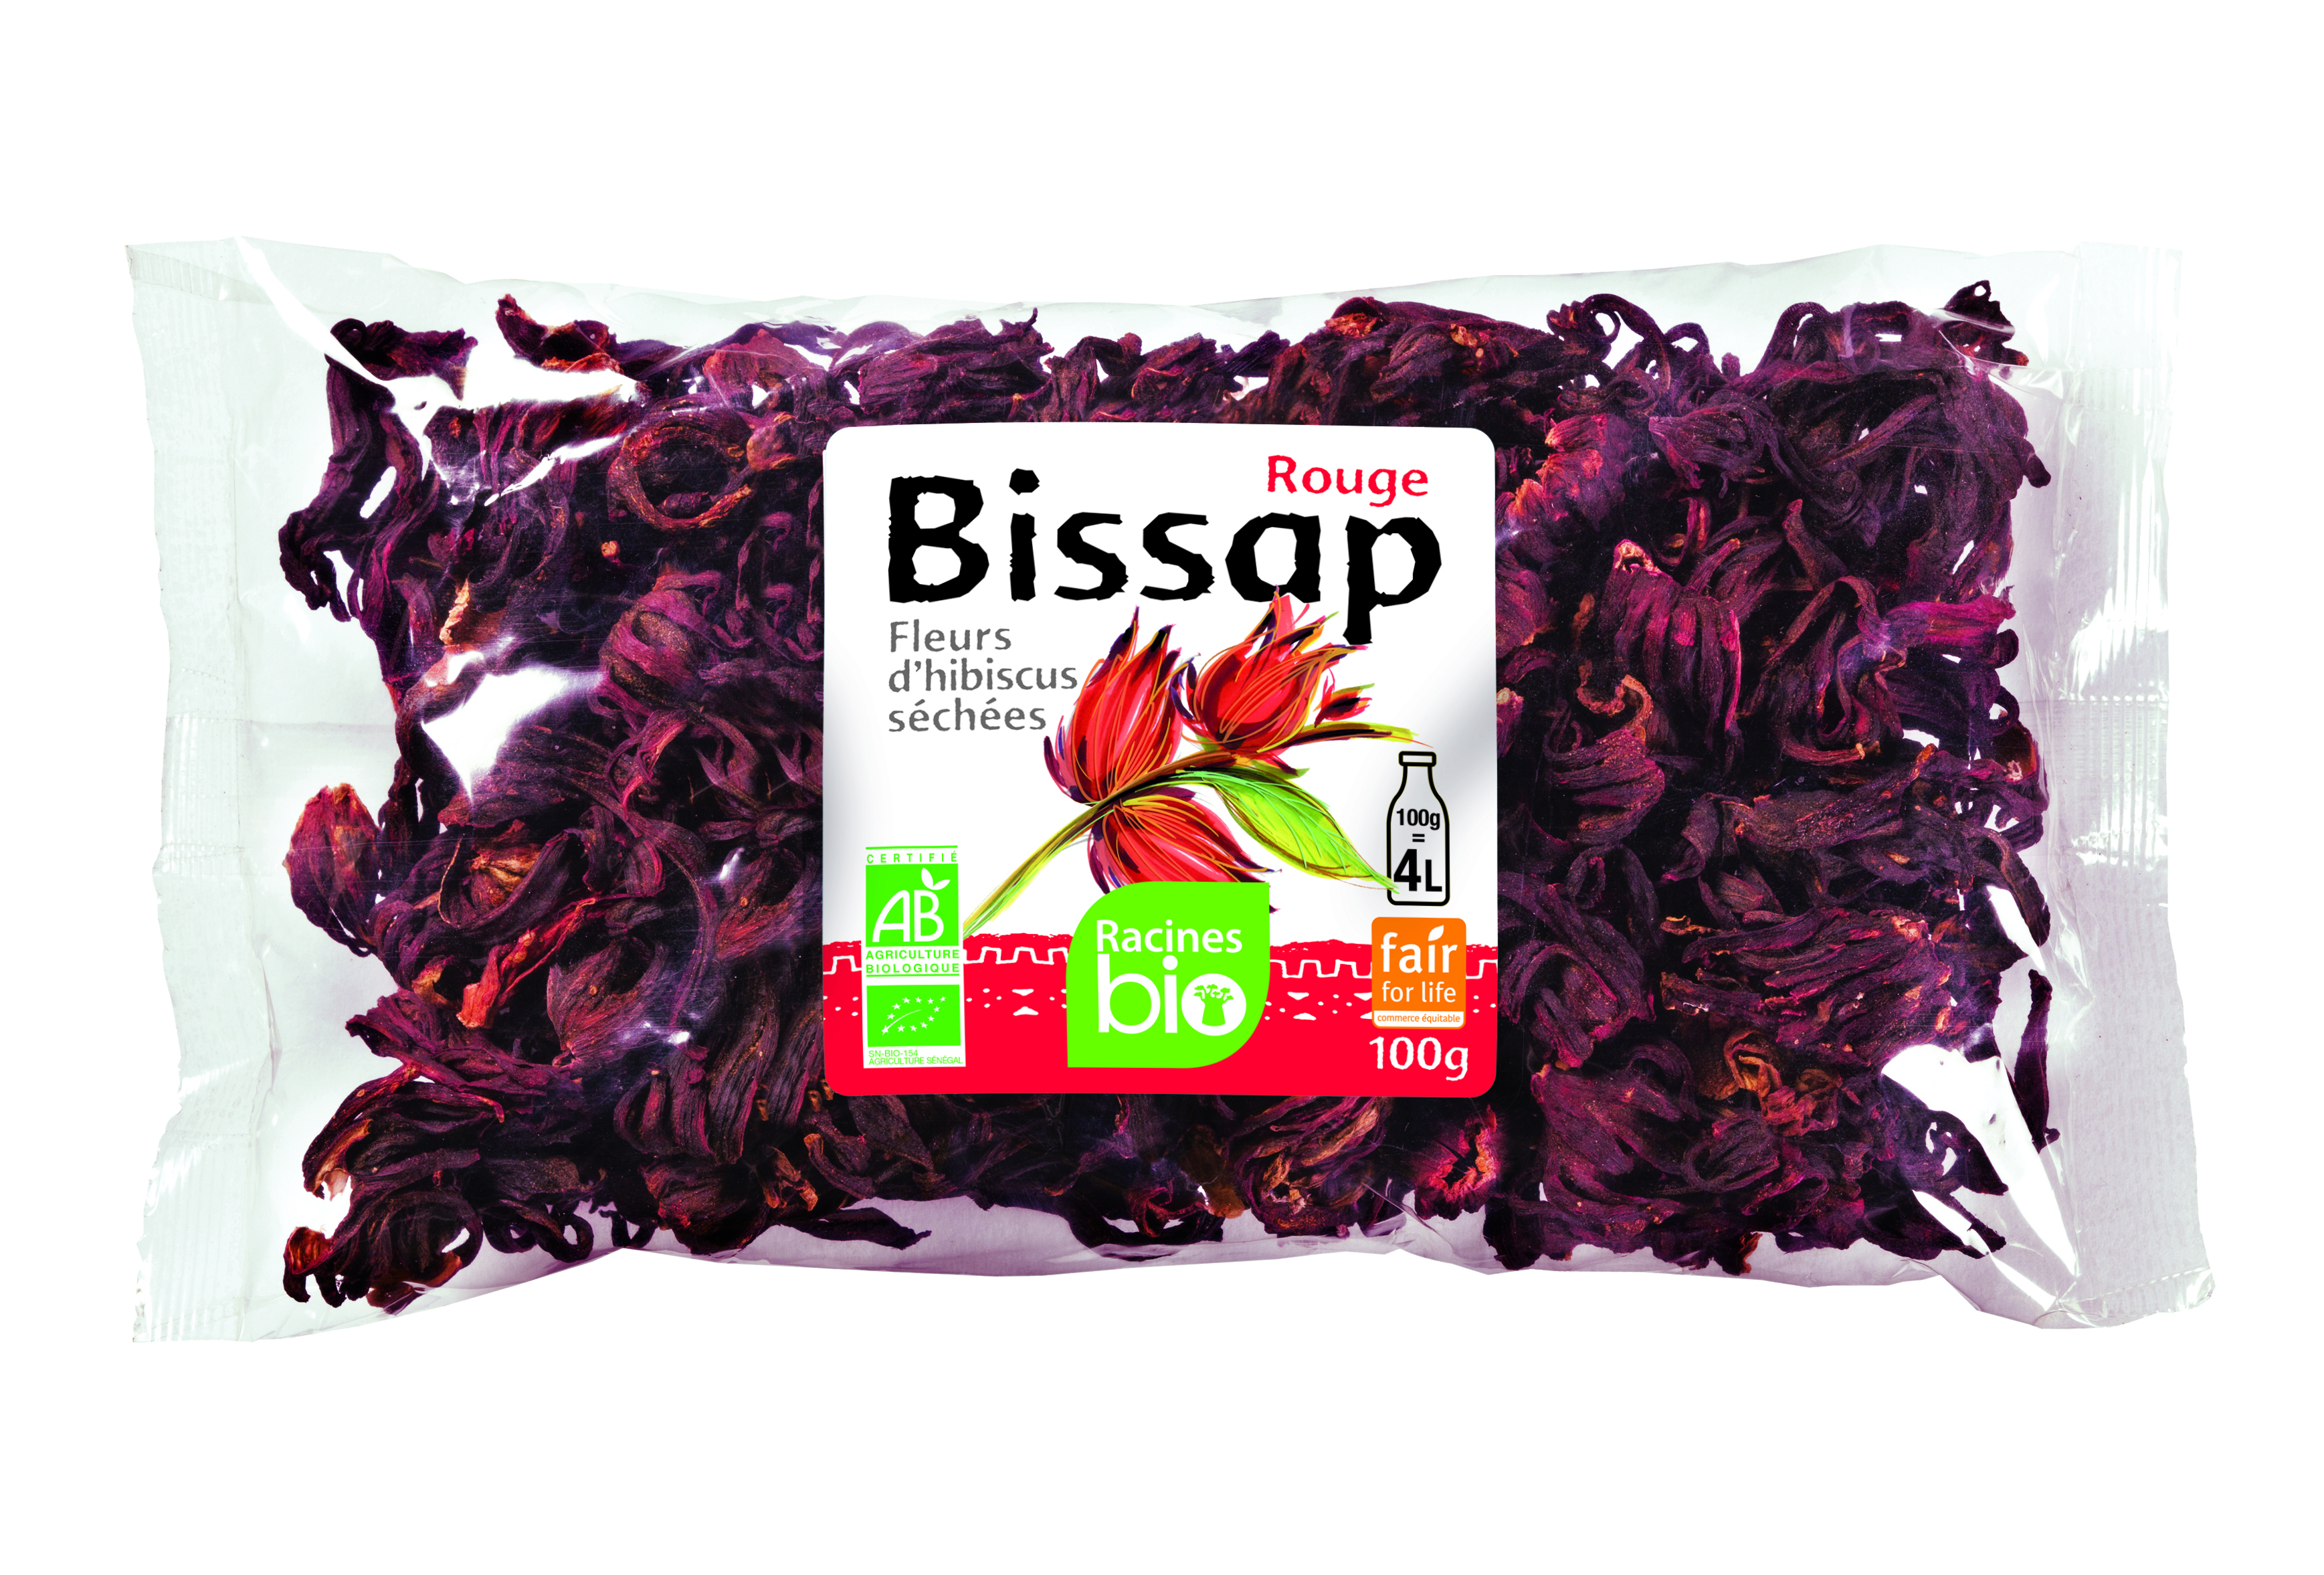 Fleurs de bissap (hibiscus) rouge séchées bio - Racines